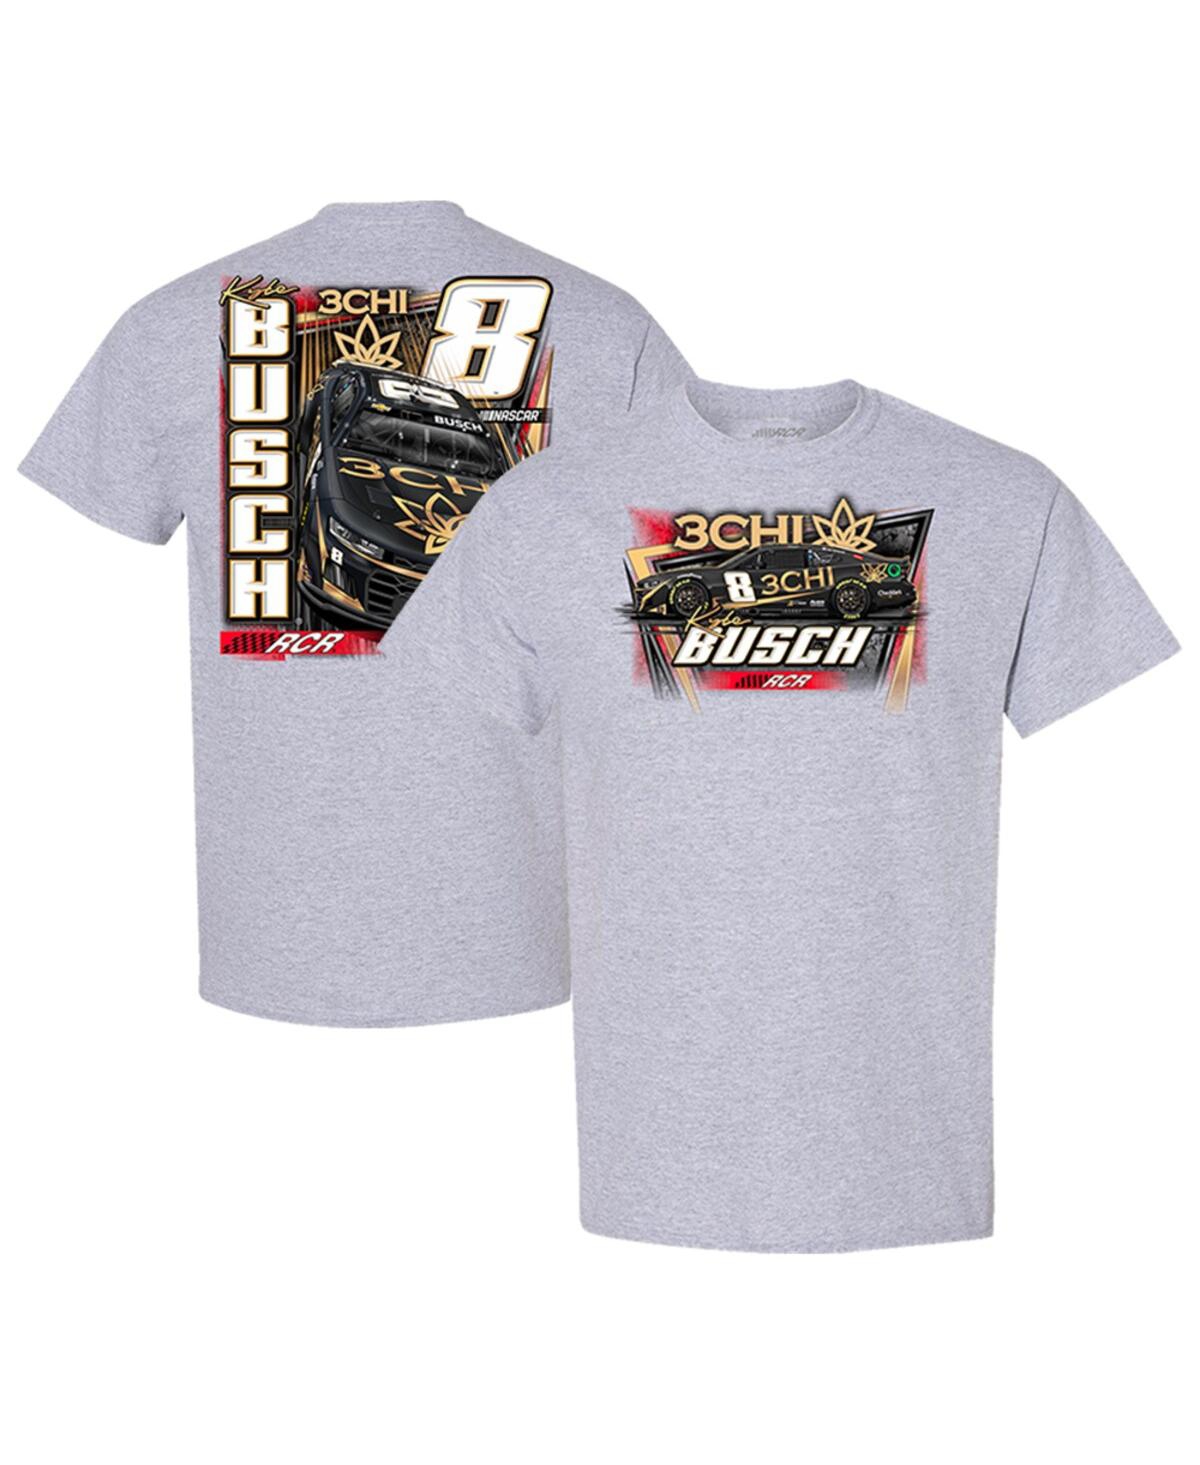 Men's Richard Childress Racing Team Collection Heather Gray Kyle Busch 3CHI Car T-shirt - Heather Gray